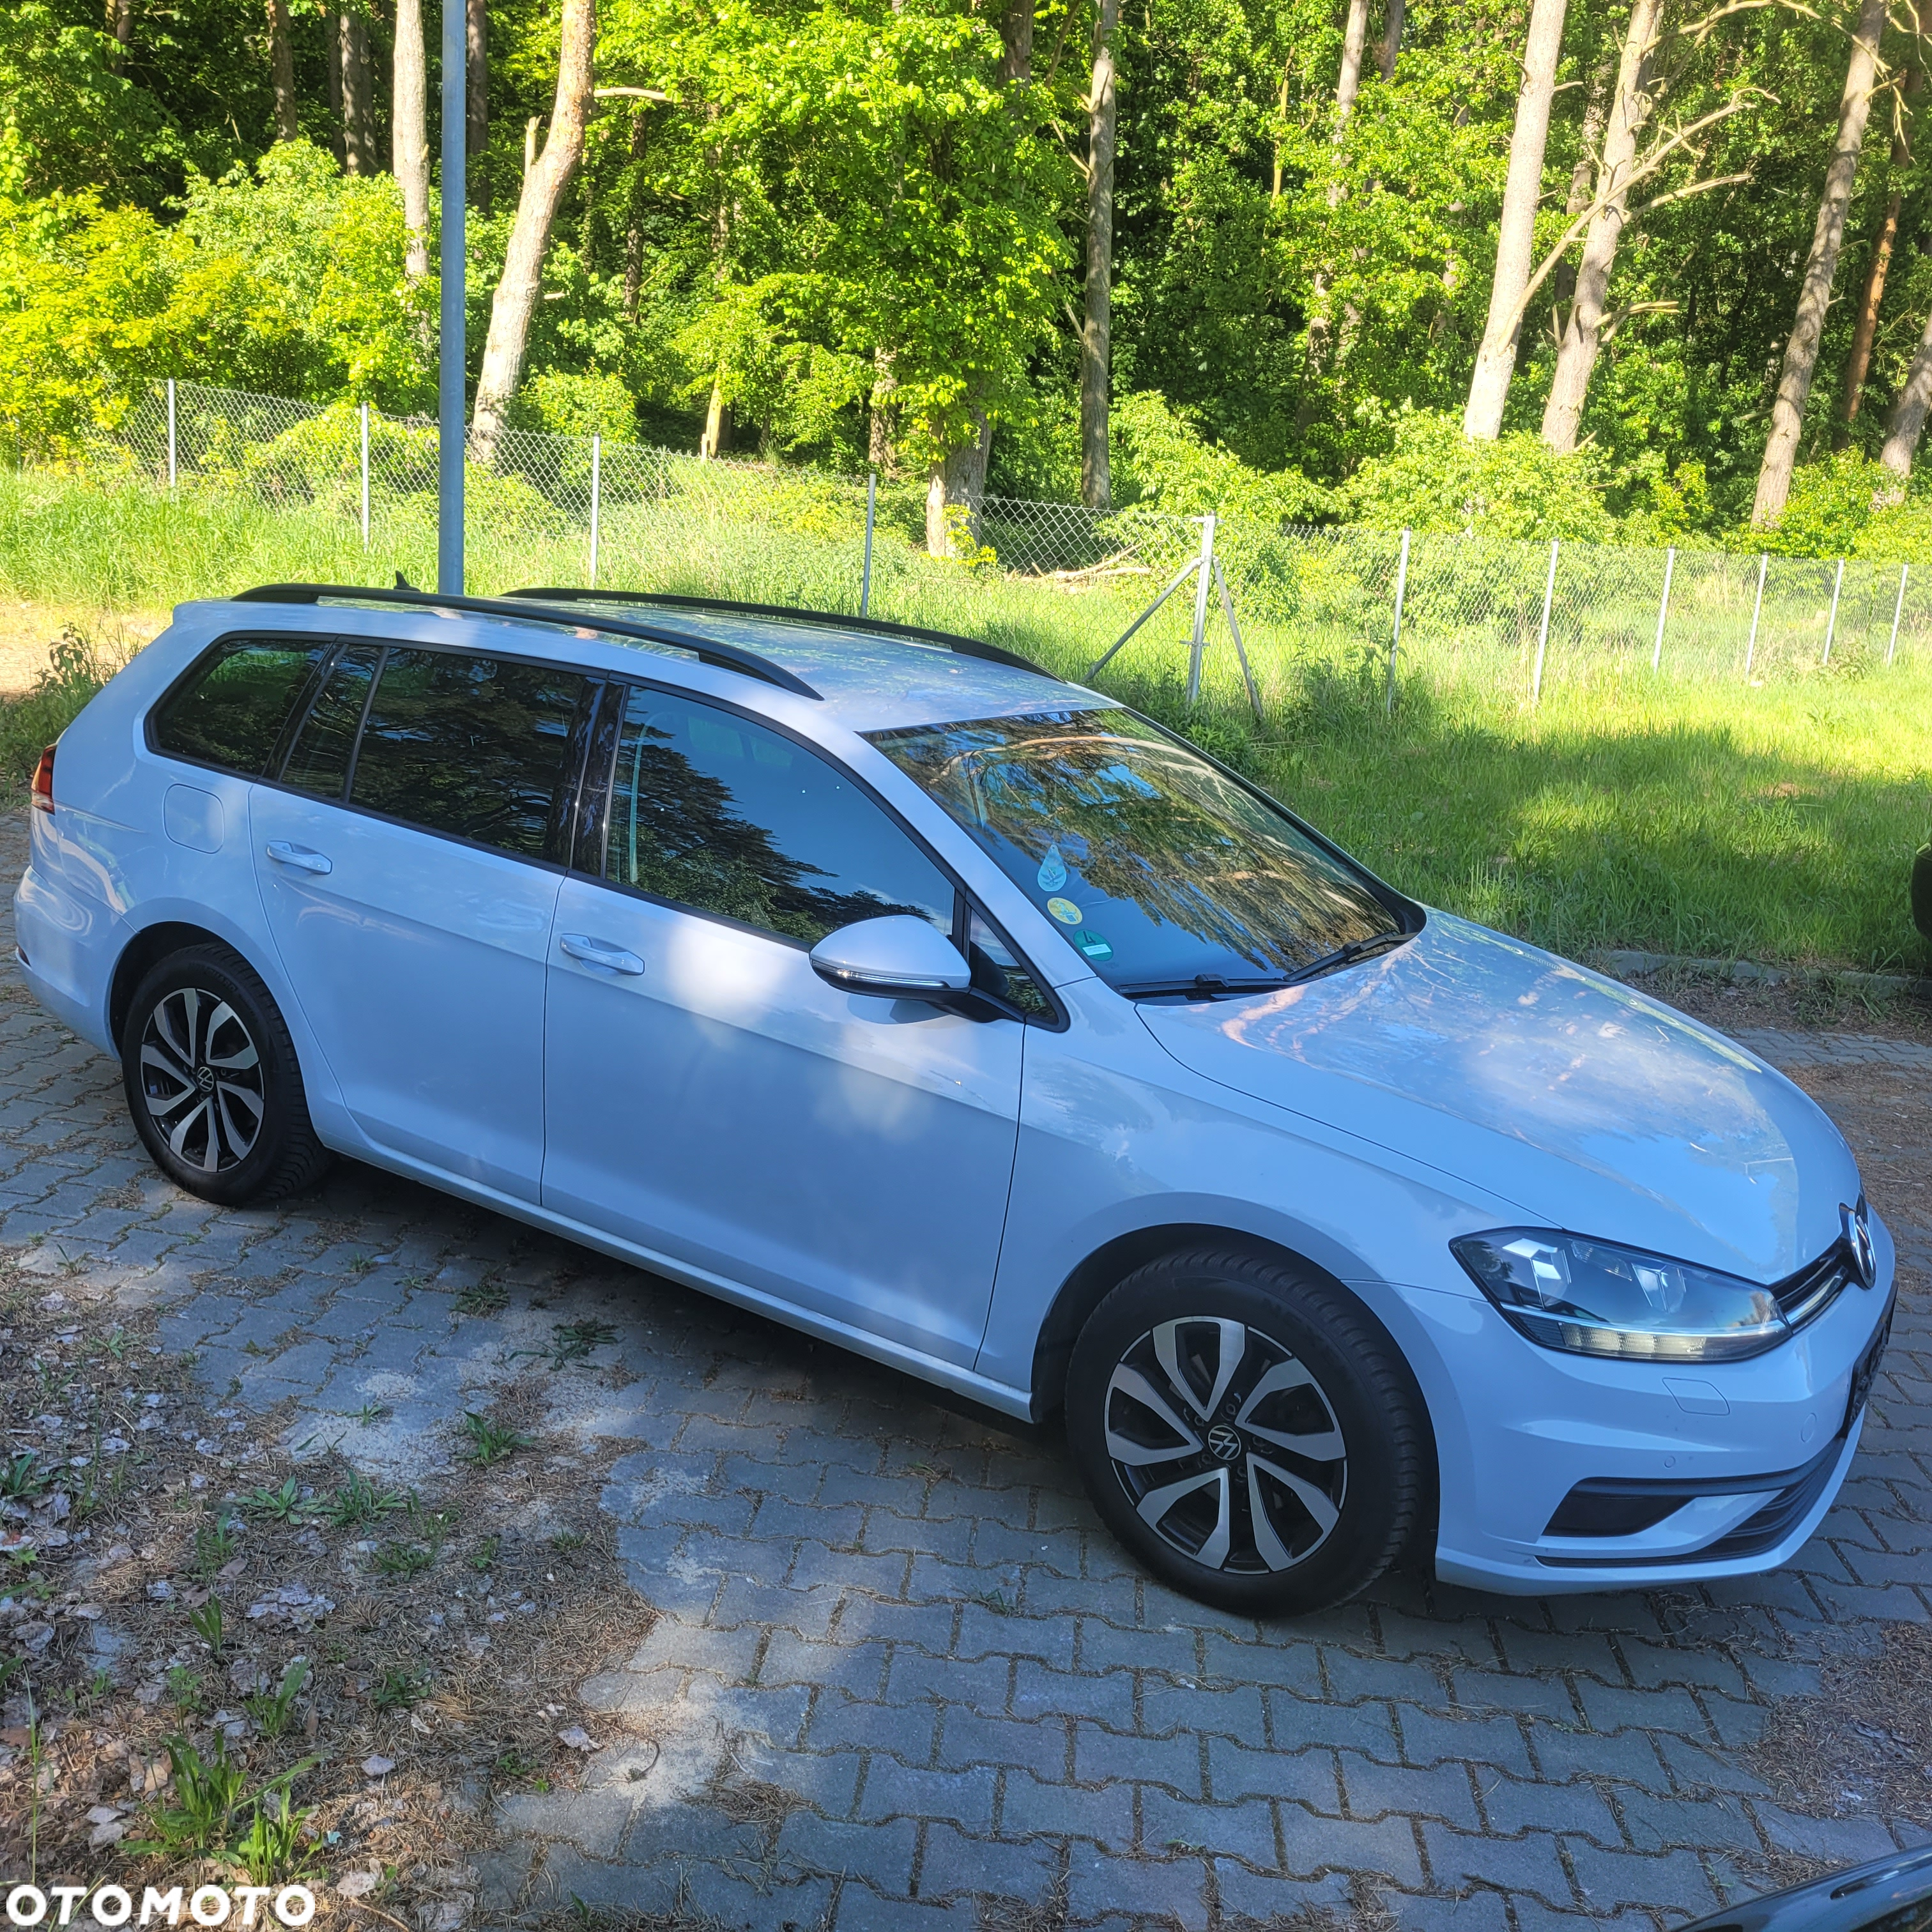 Volkswagen Golf 1.6 TDI (BlueMotion Technology) DSG Comfortline - 10